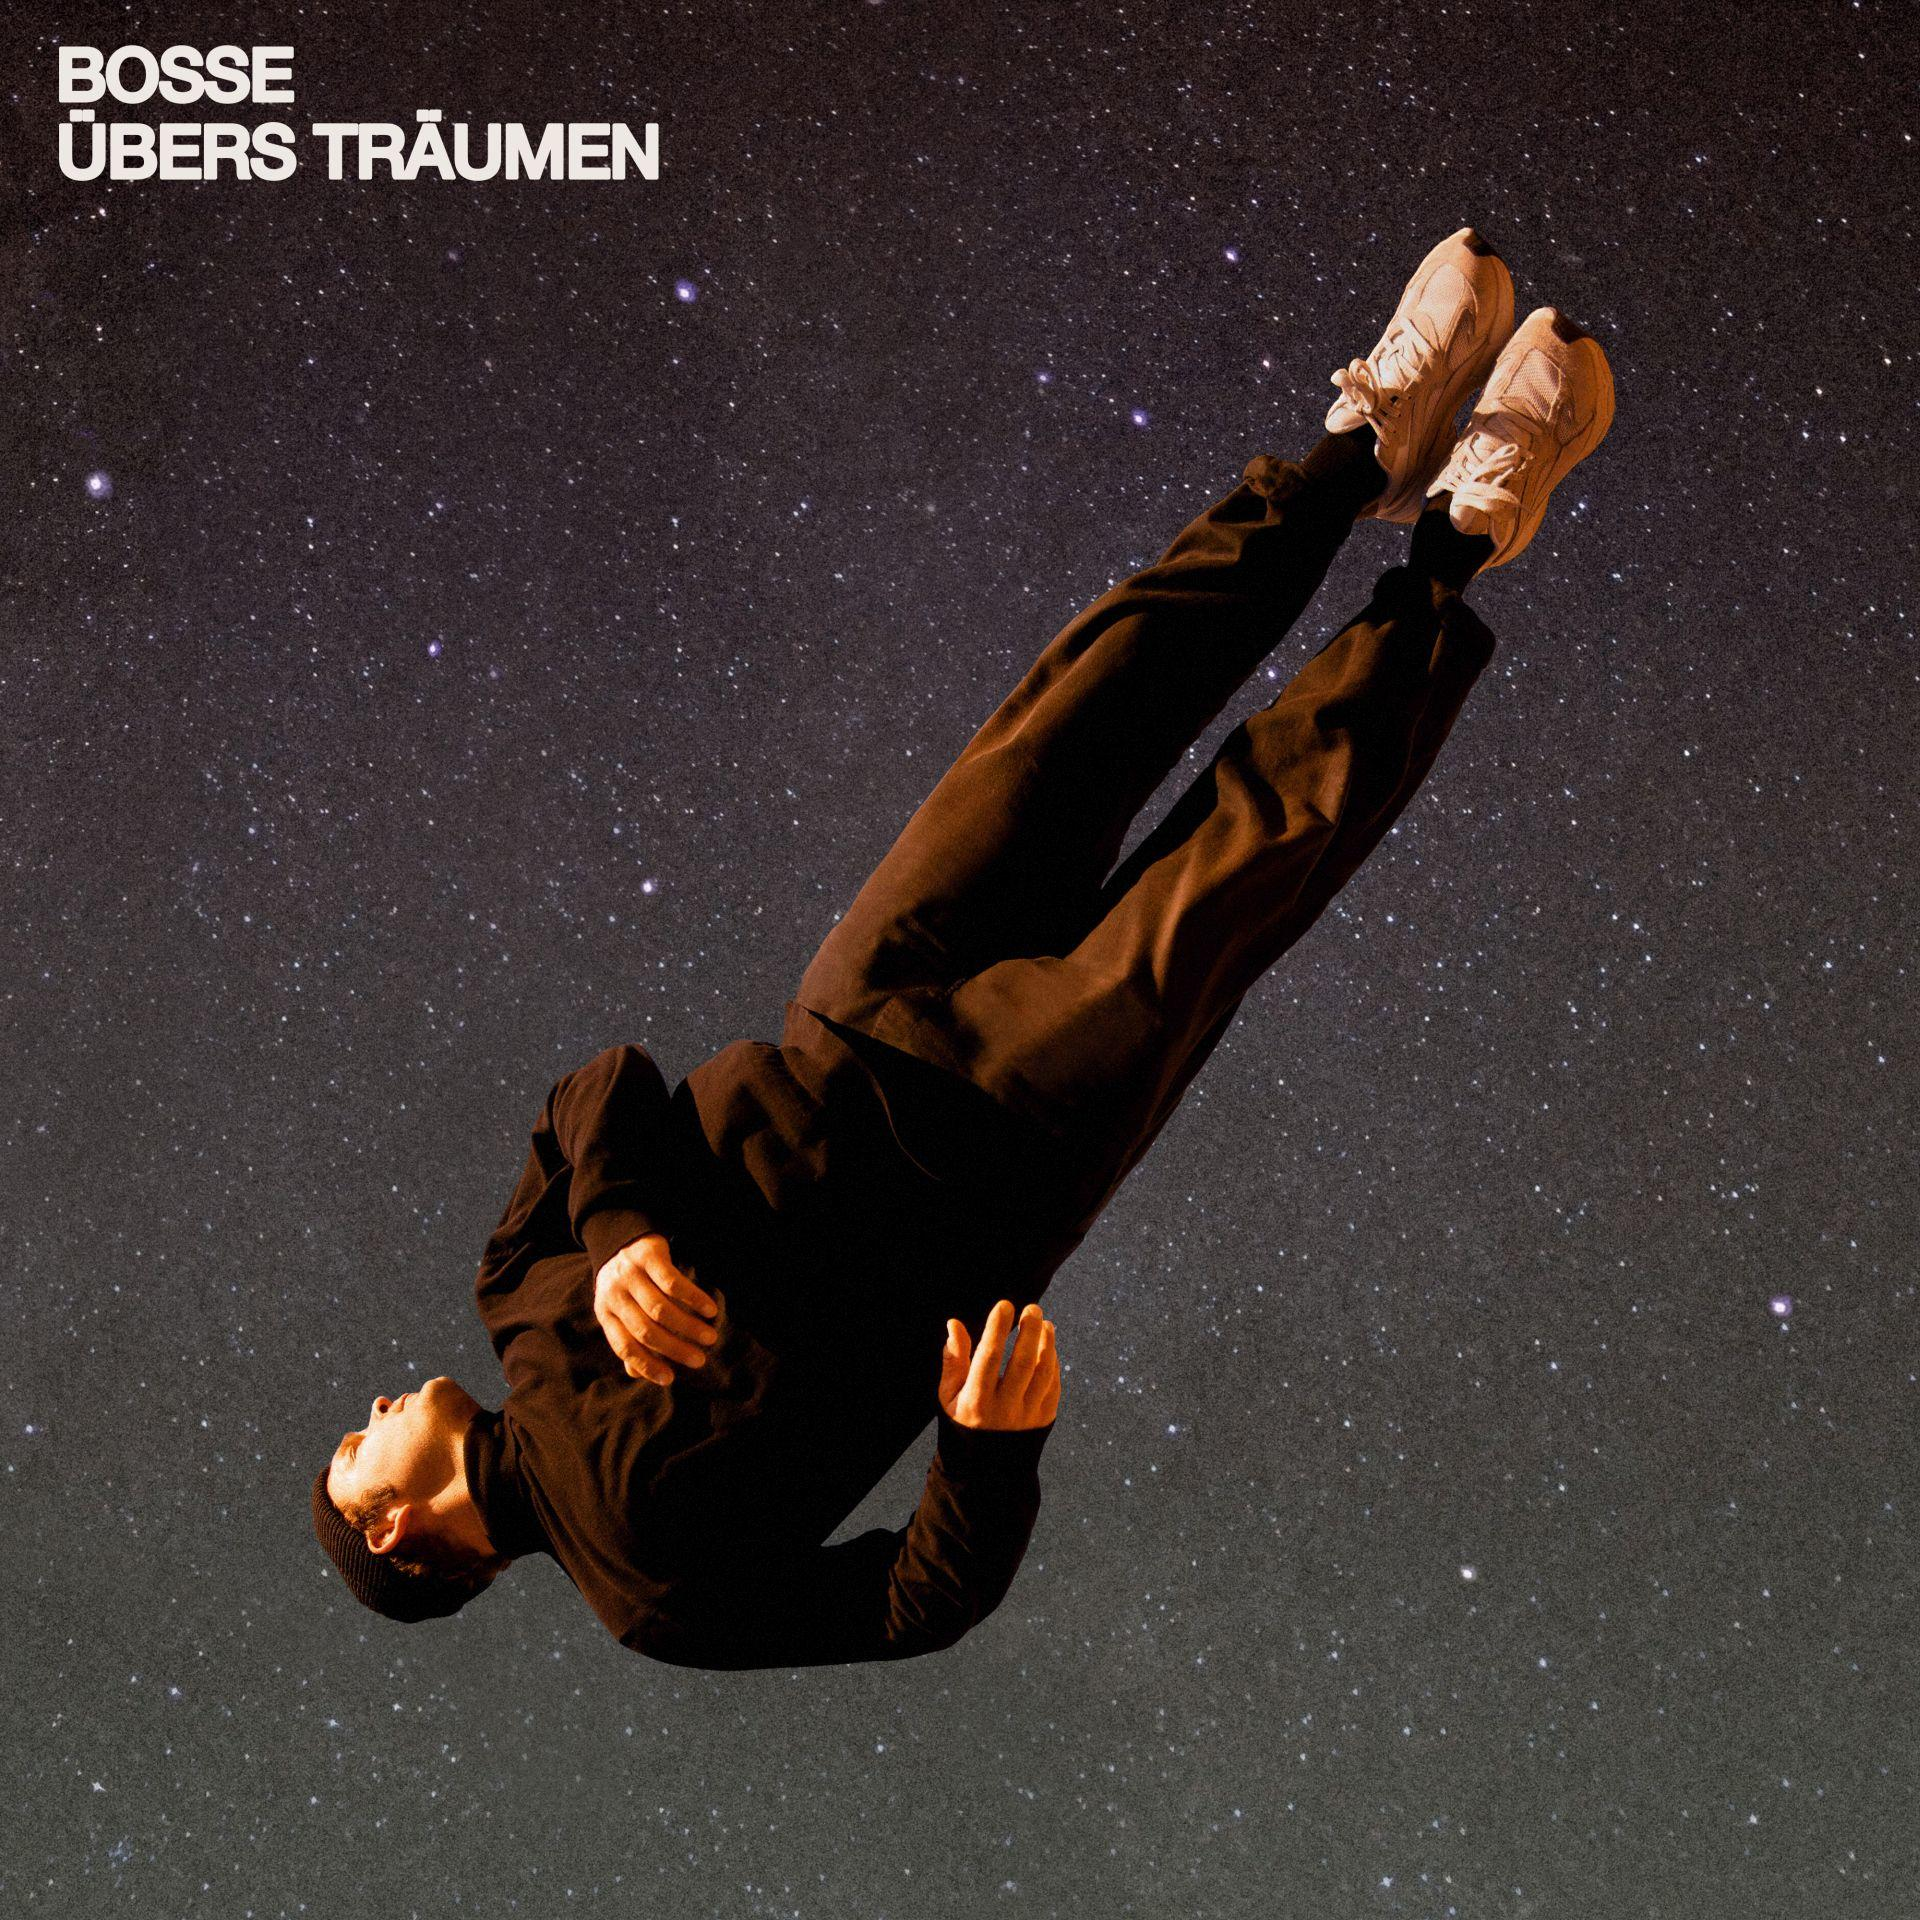 Bosse - Übers Träumen (Ltd.Deluxe (CD) - Edition)